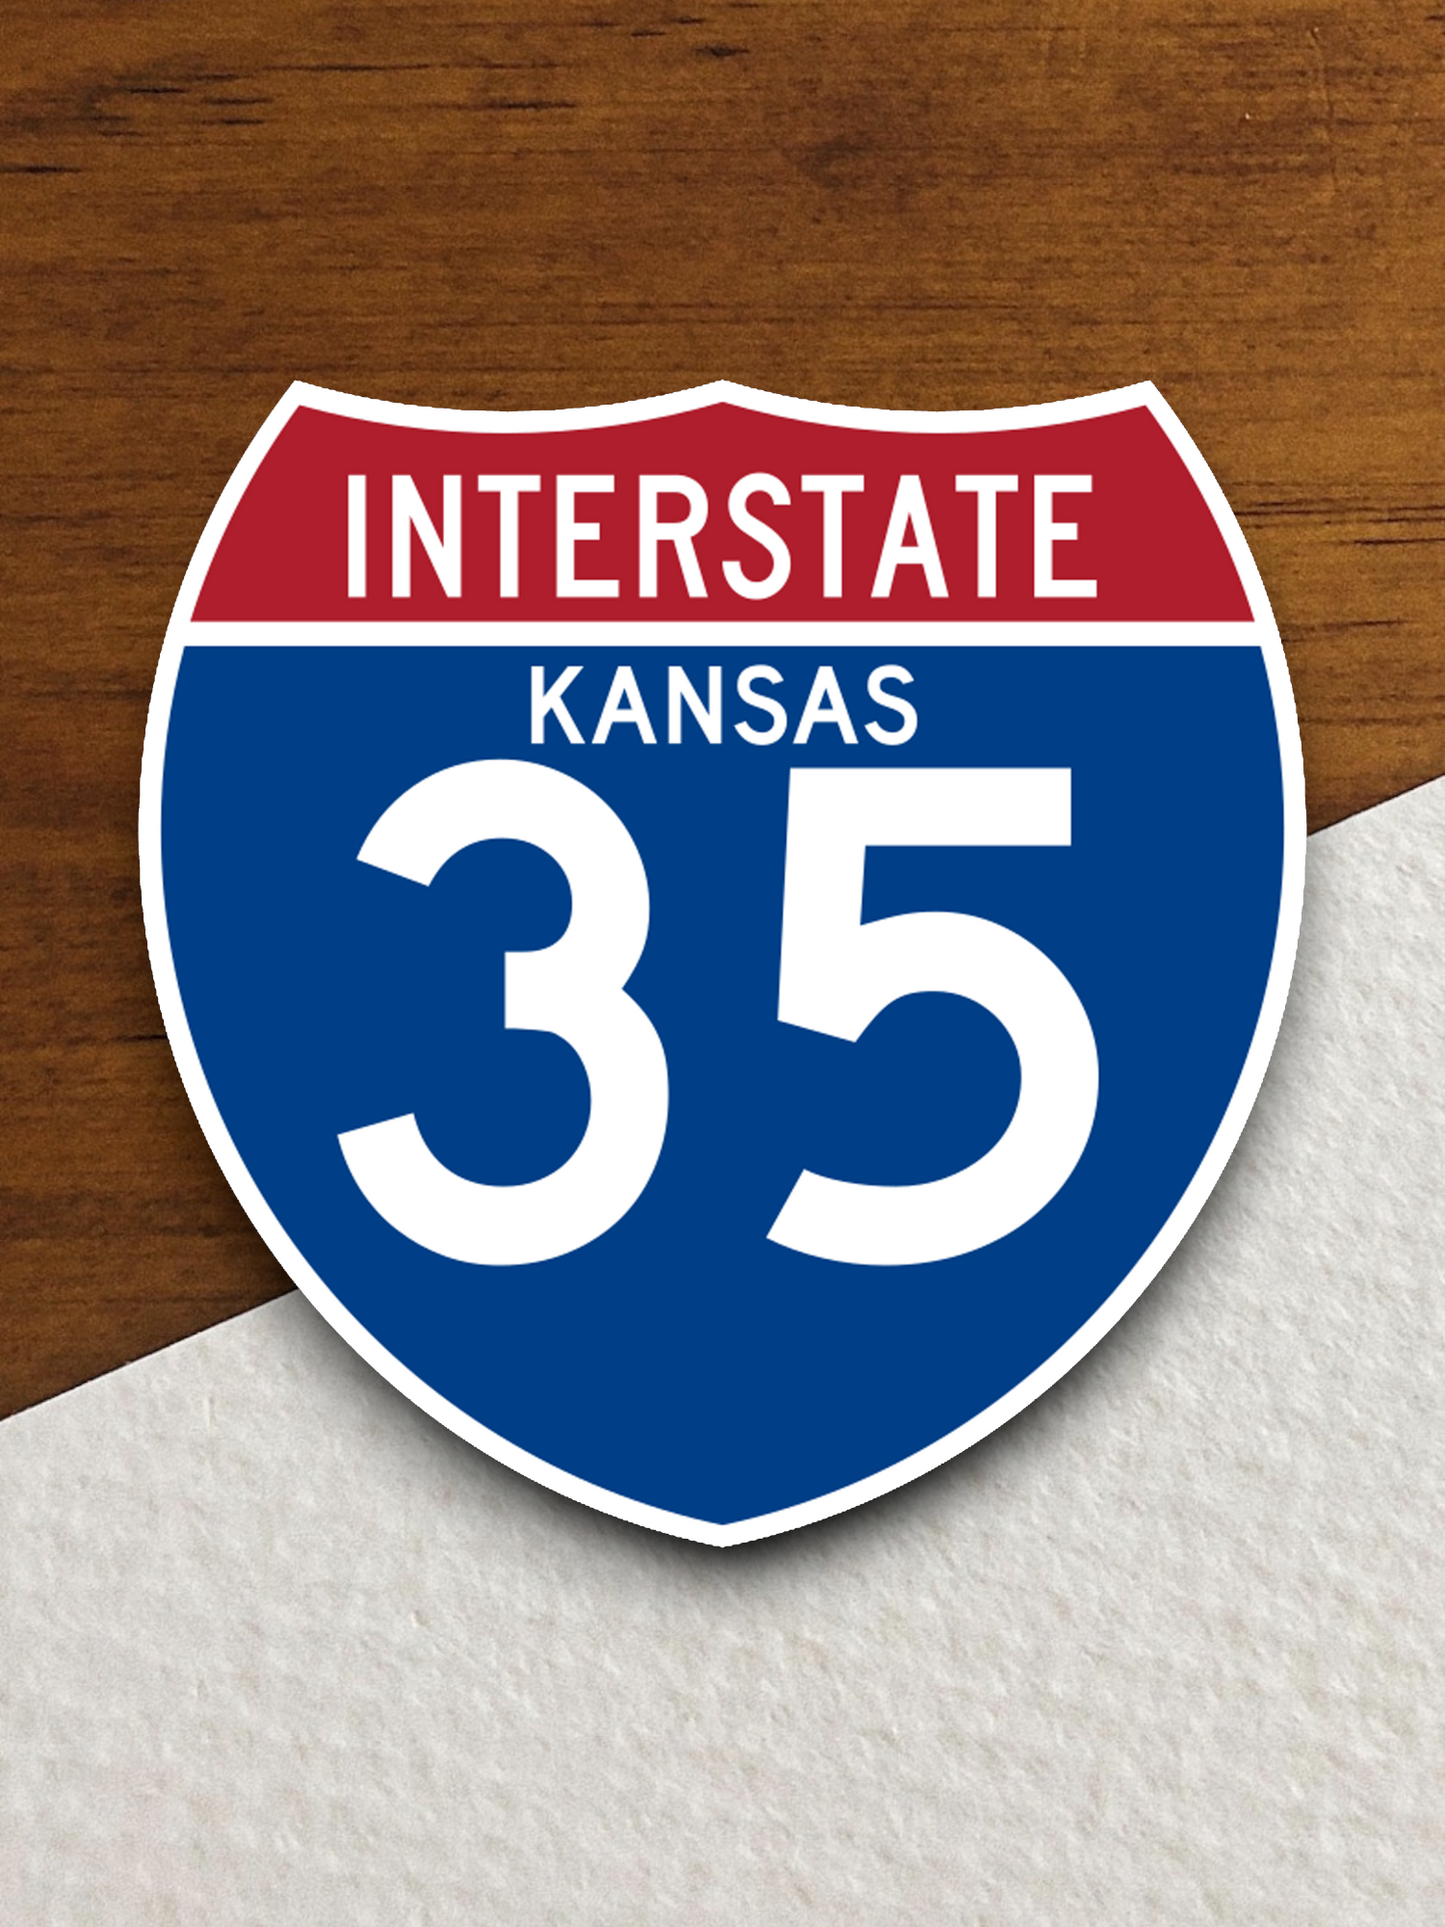 Interstate I-35 Kansas - Road Sign Sticker